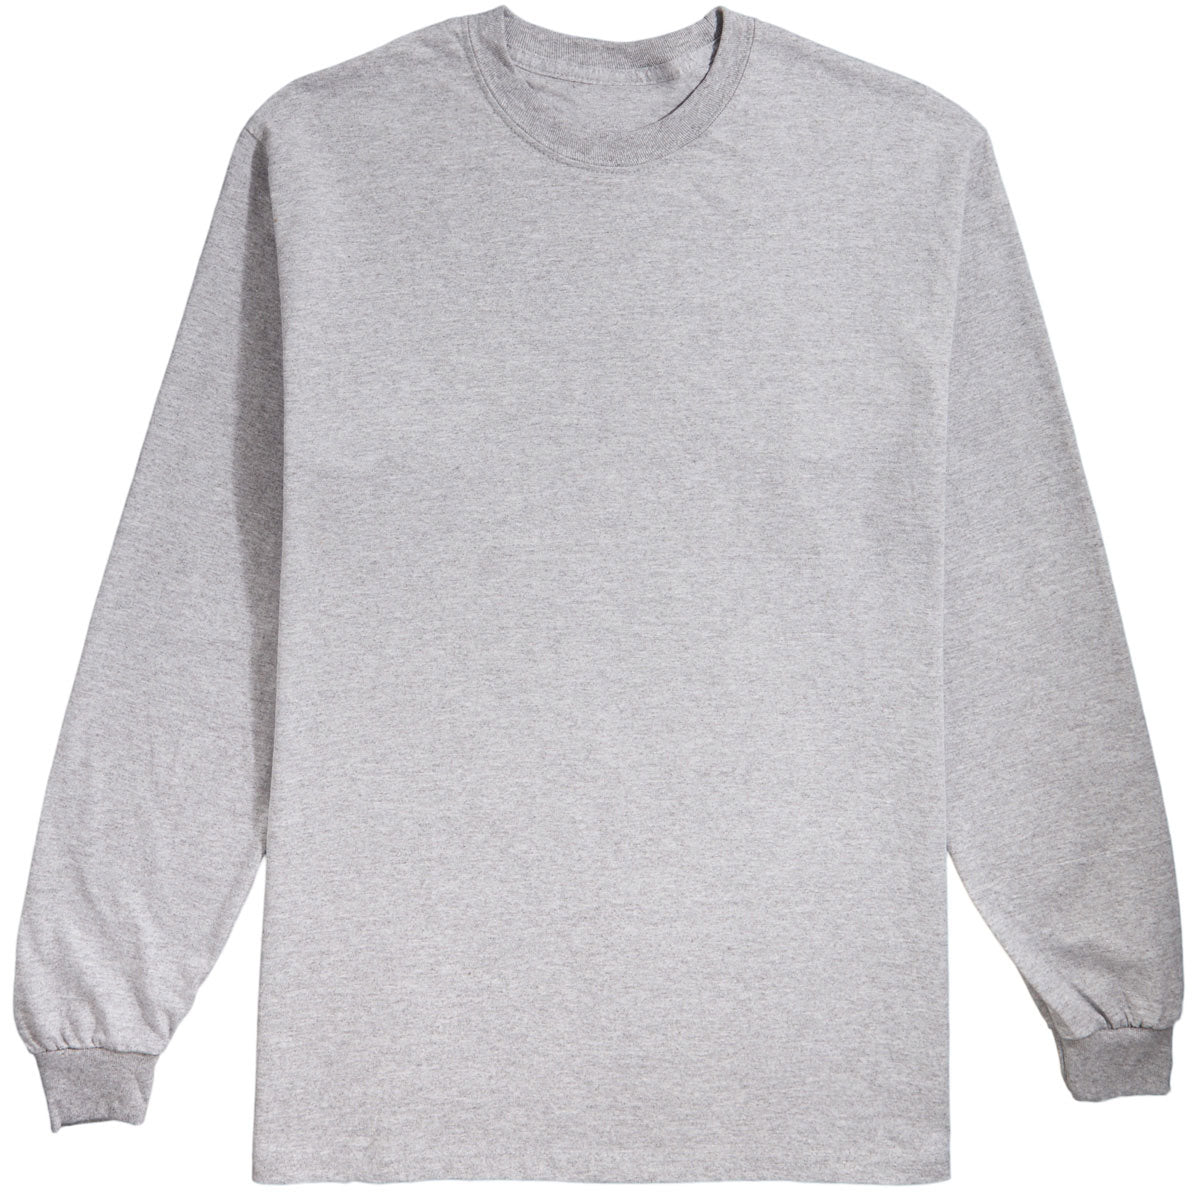 Habitat Crest Long Sleeve T-Shirt - Heather Grey - XL image 1